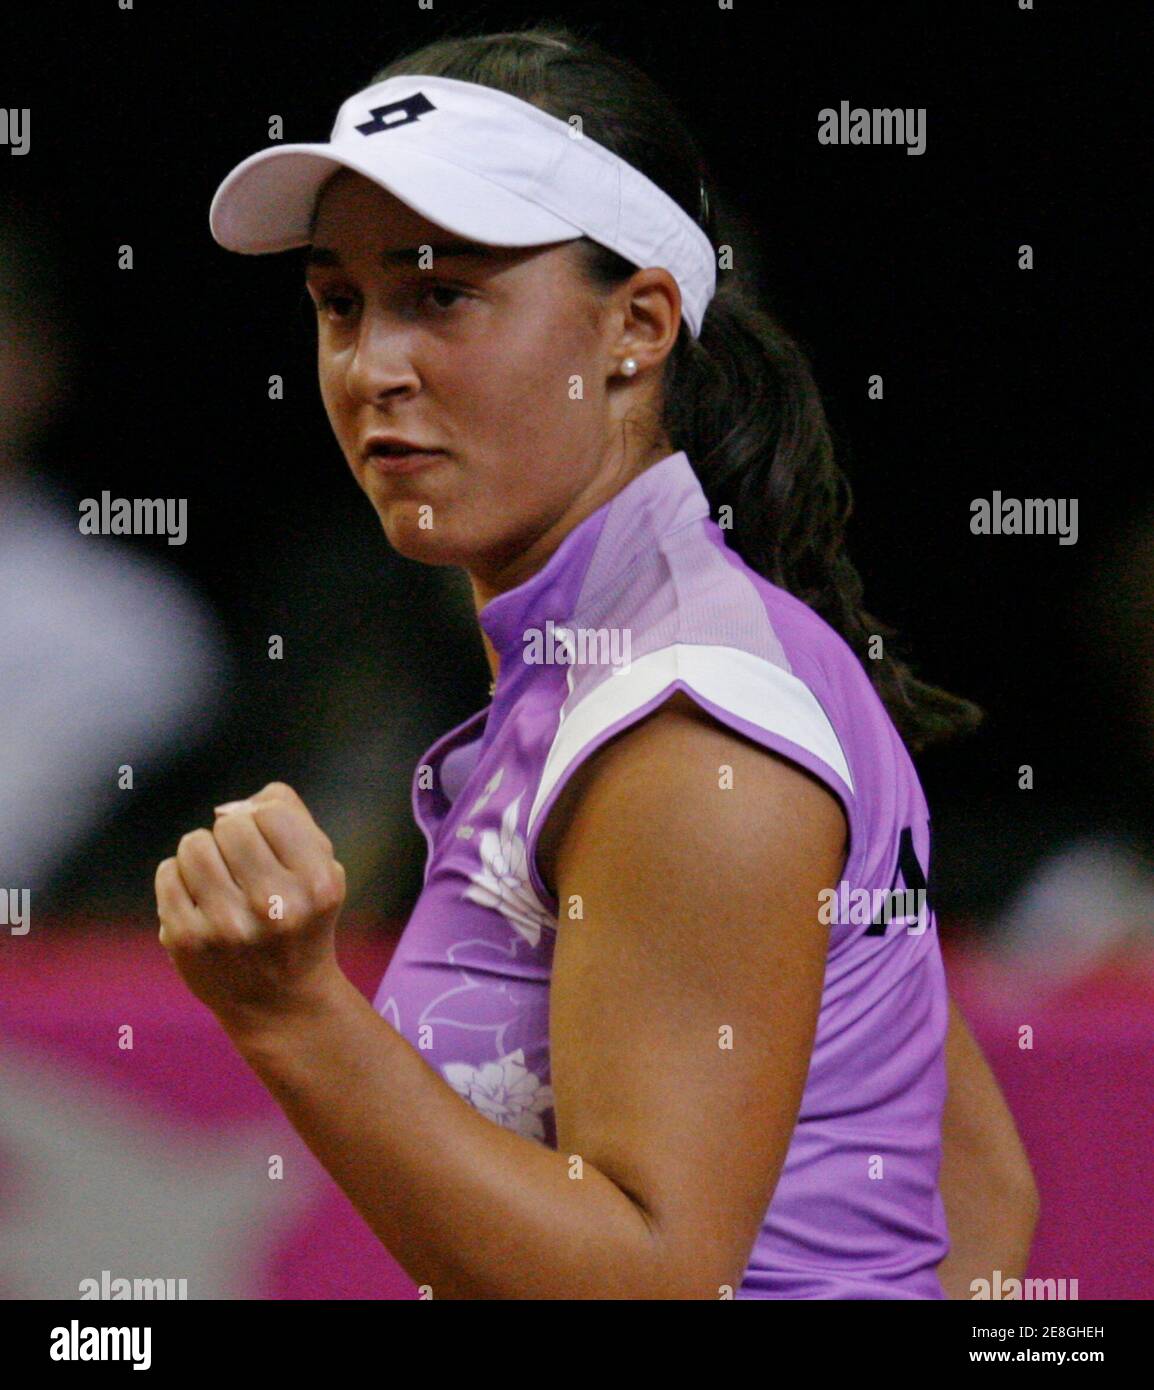 Austria's Tamira Paszek reacts during Fed Cup tennis match against Australia's Samantha Stosur in Dornbirn April 21, 2007. REUTERS/Miro Kuzmanovic (AUSTRIA) Stock Photo